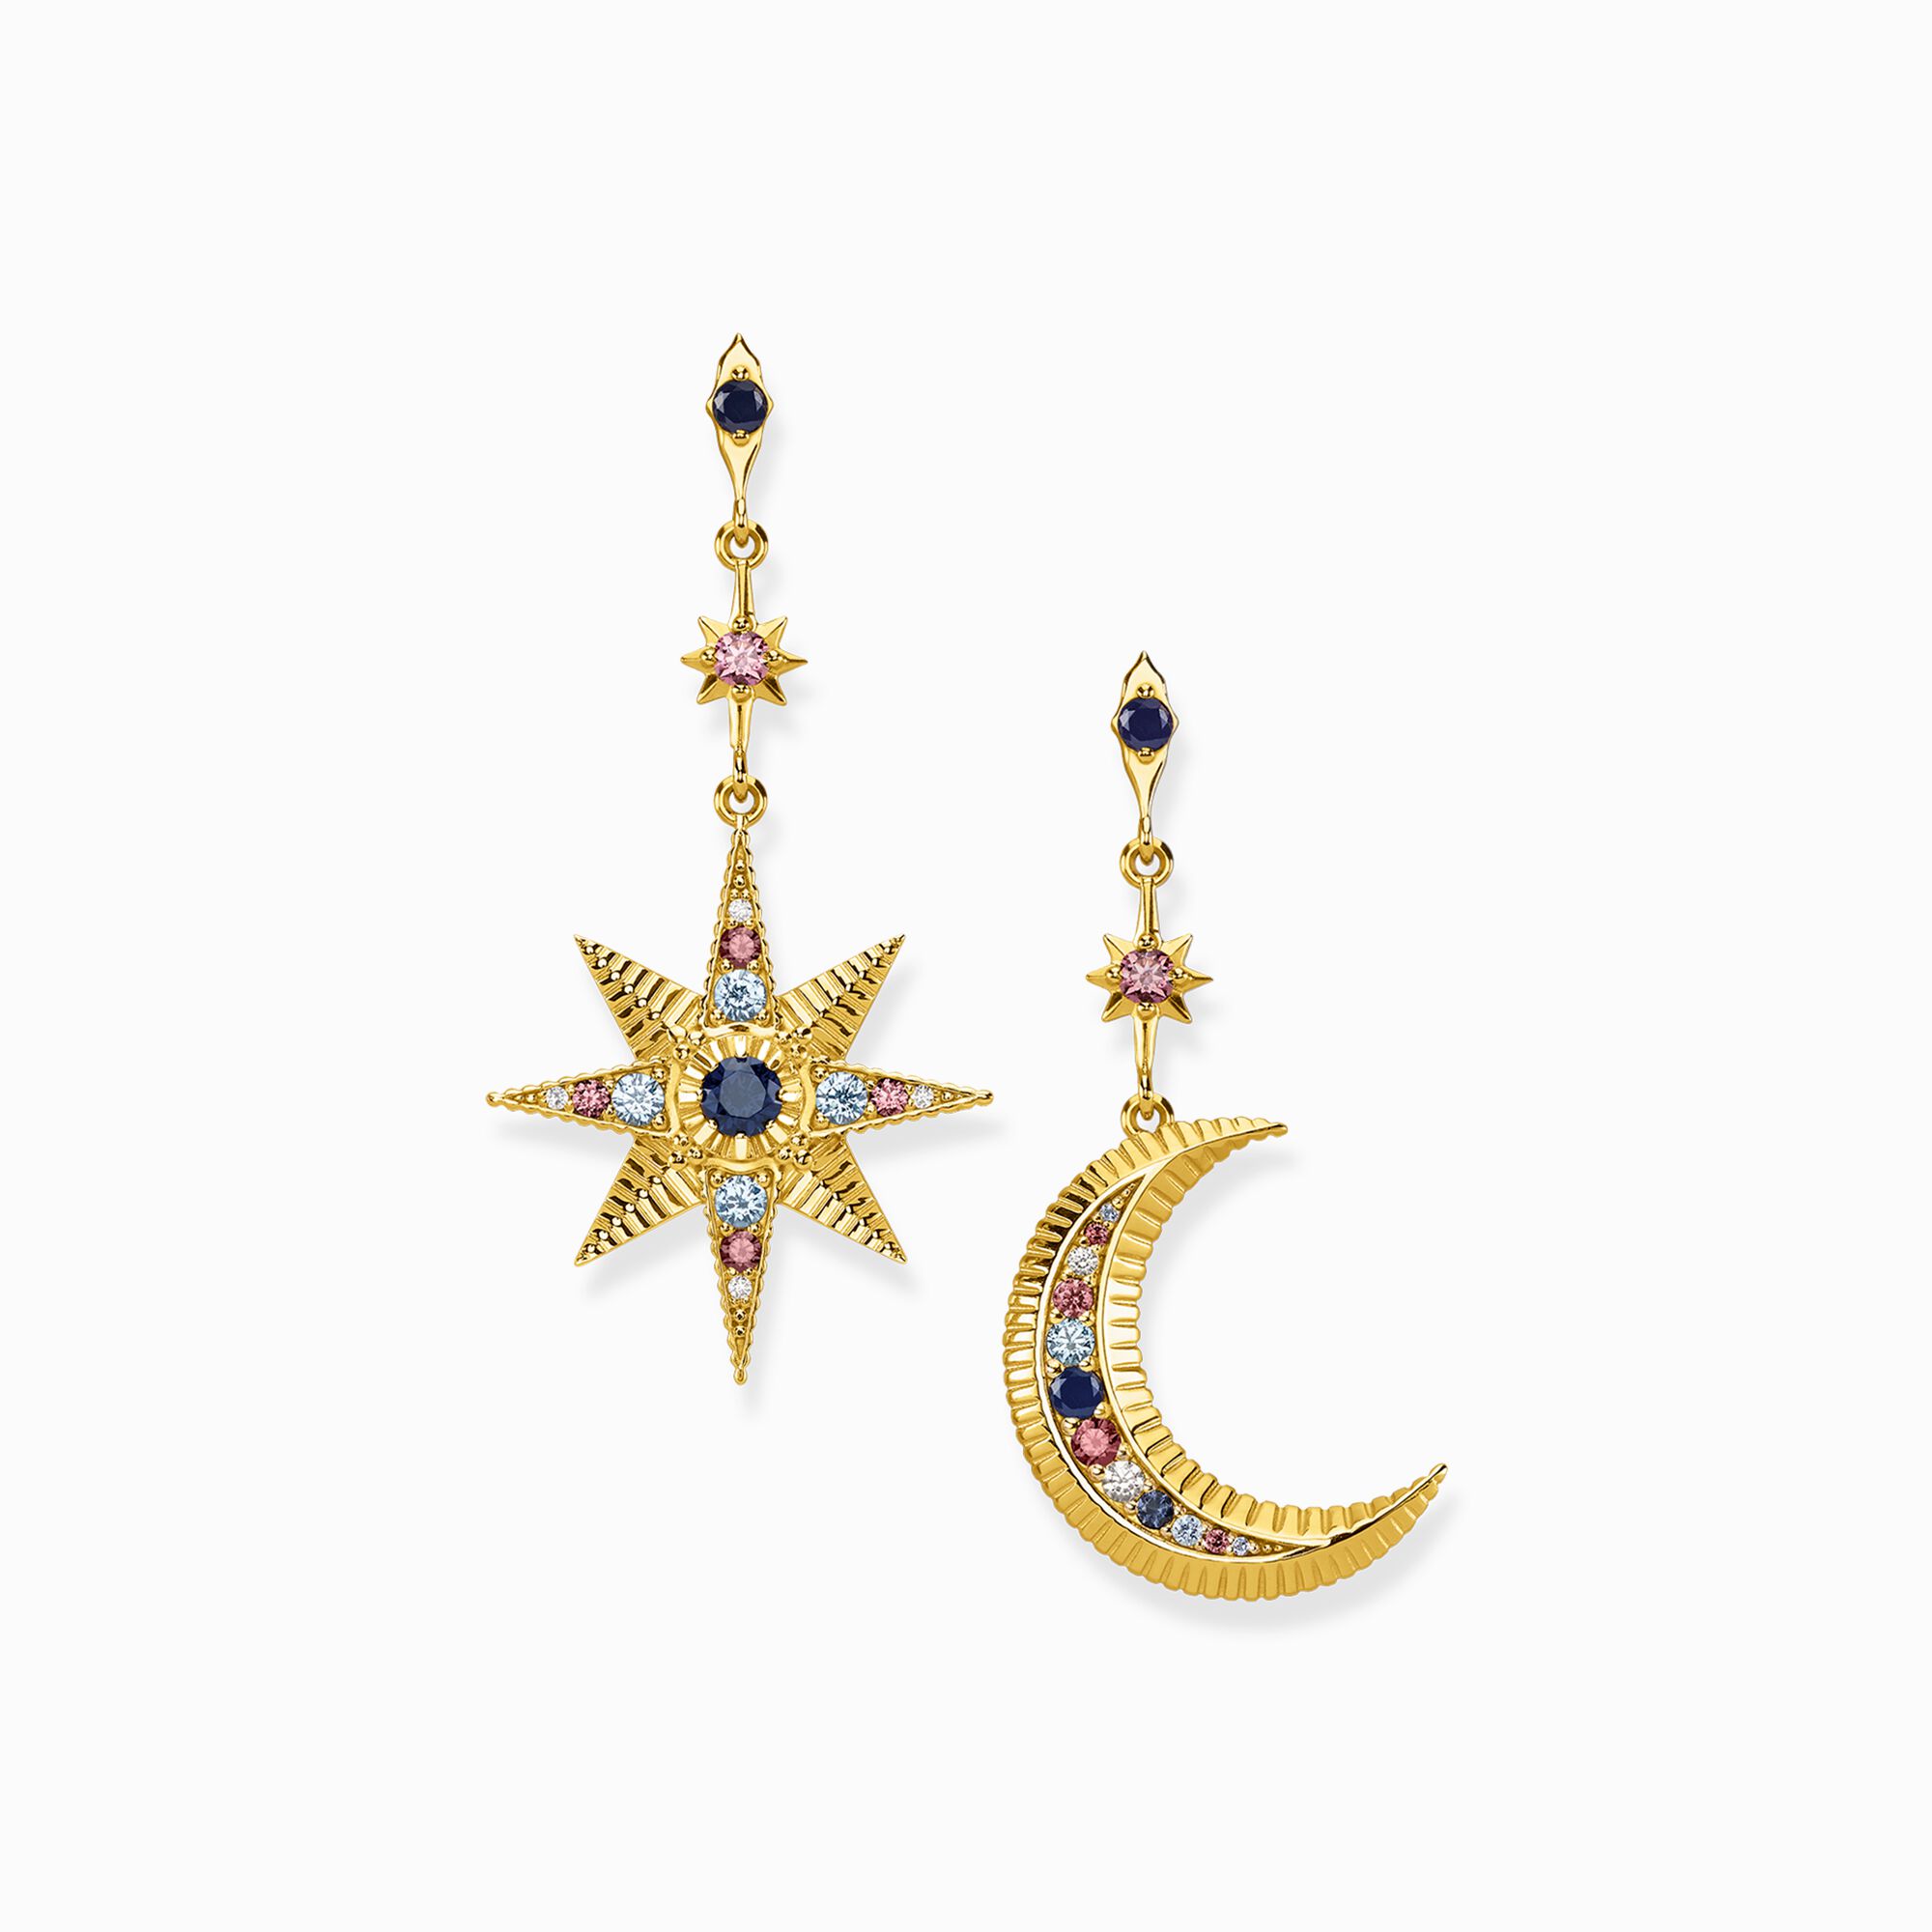 Thomas Sabo + Royalty Star And Moon Earrings